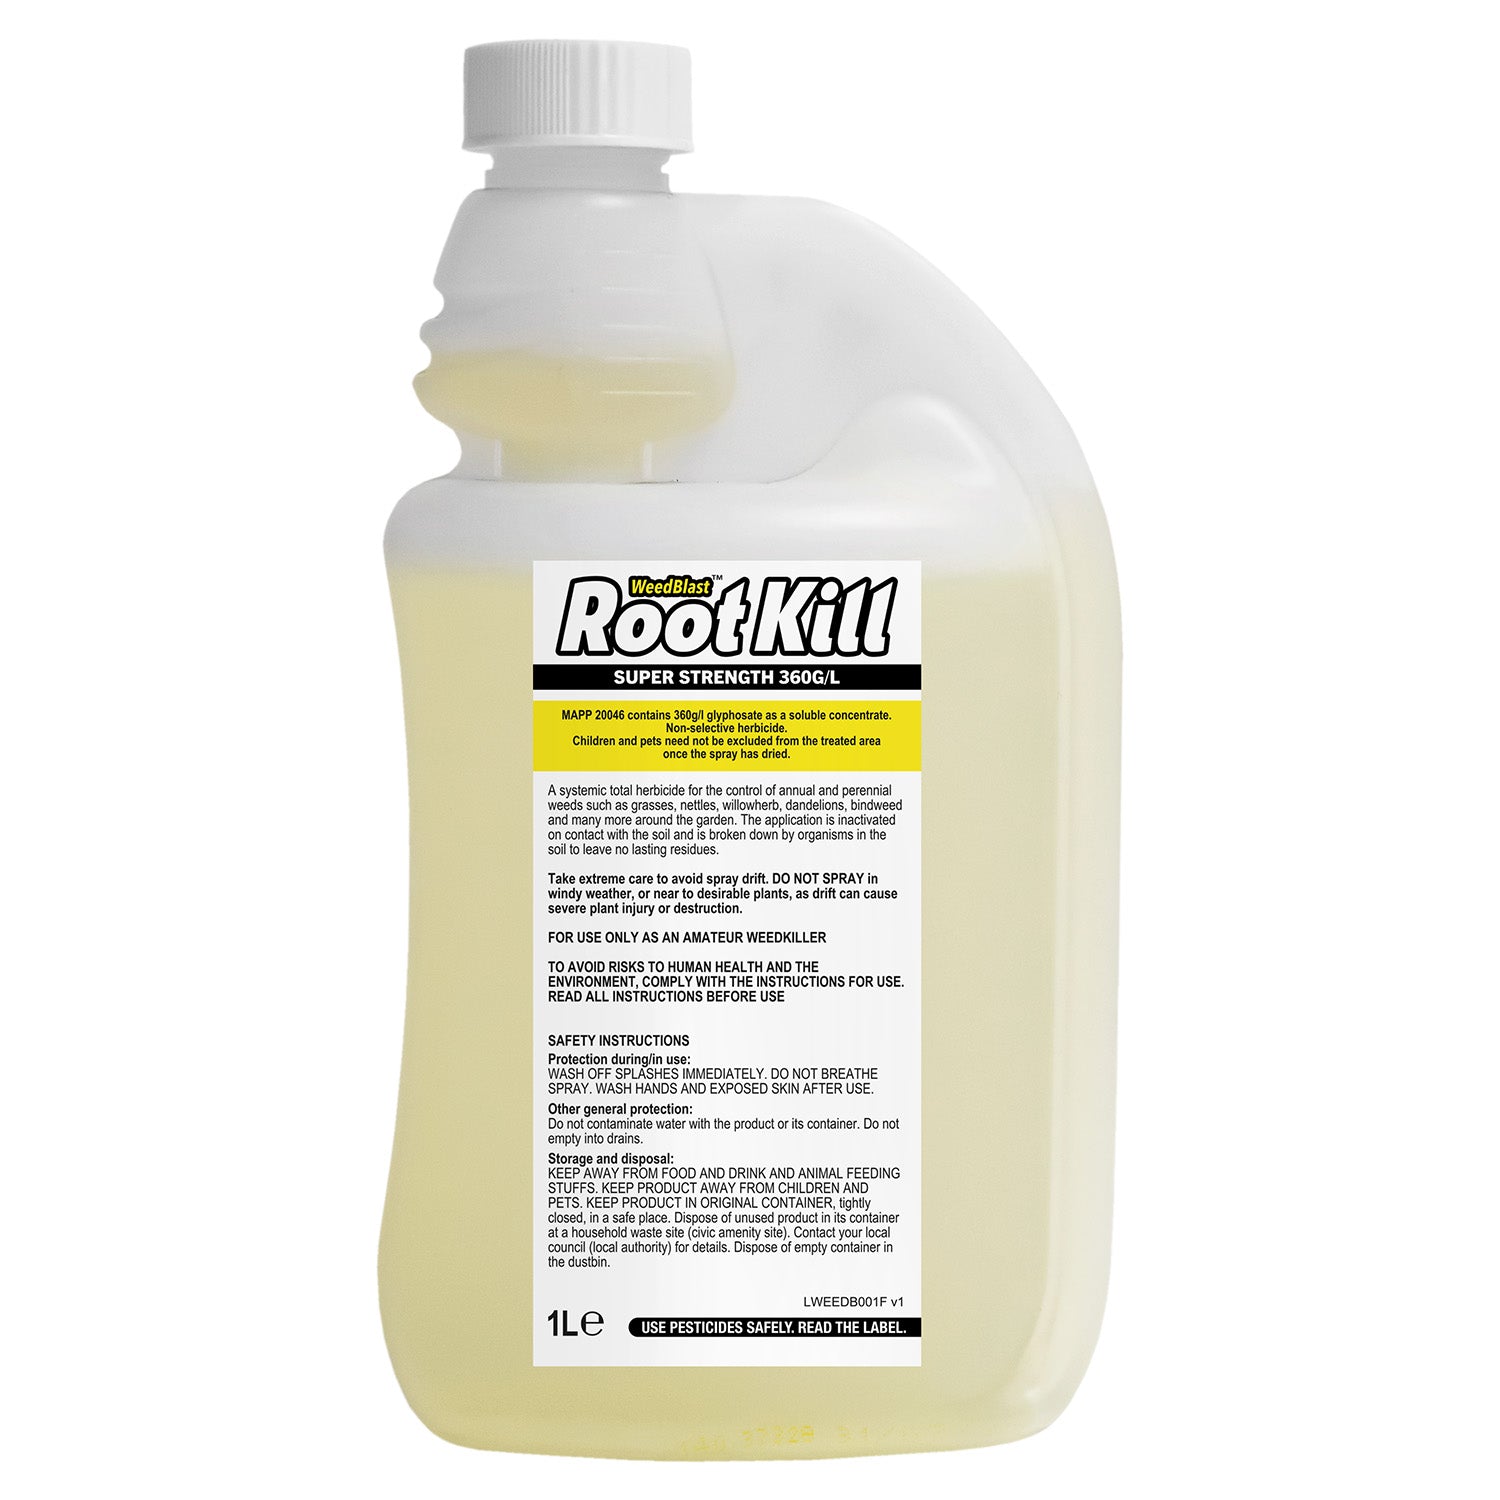 WeedBlast Rootkill Weedkiller 1 Litre 360g/L Glyphosate Concentrate with 5L Garden Sprayer, 2 x Gloves